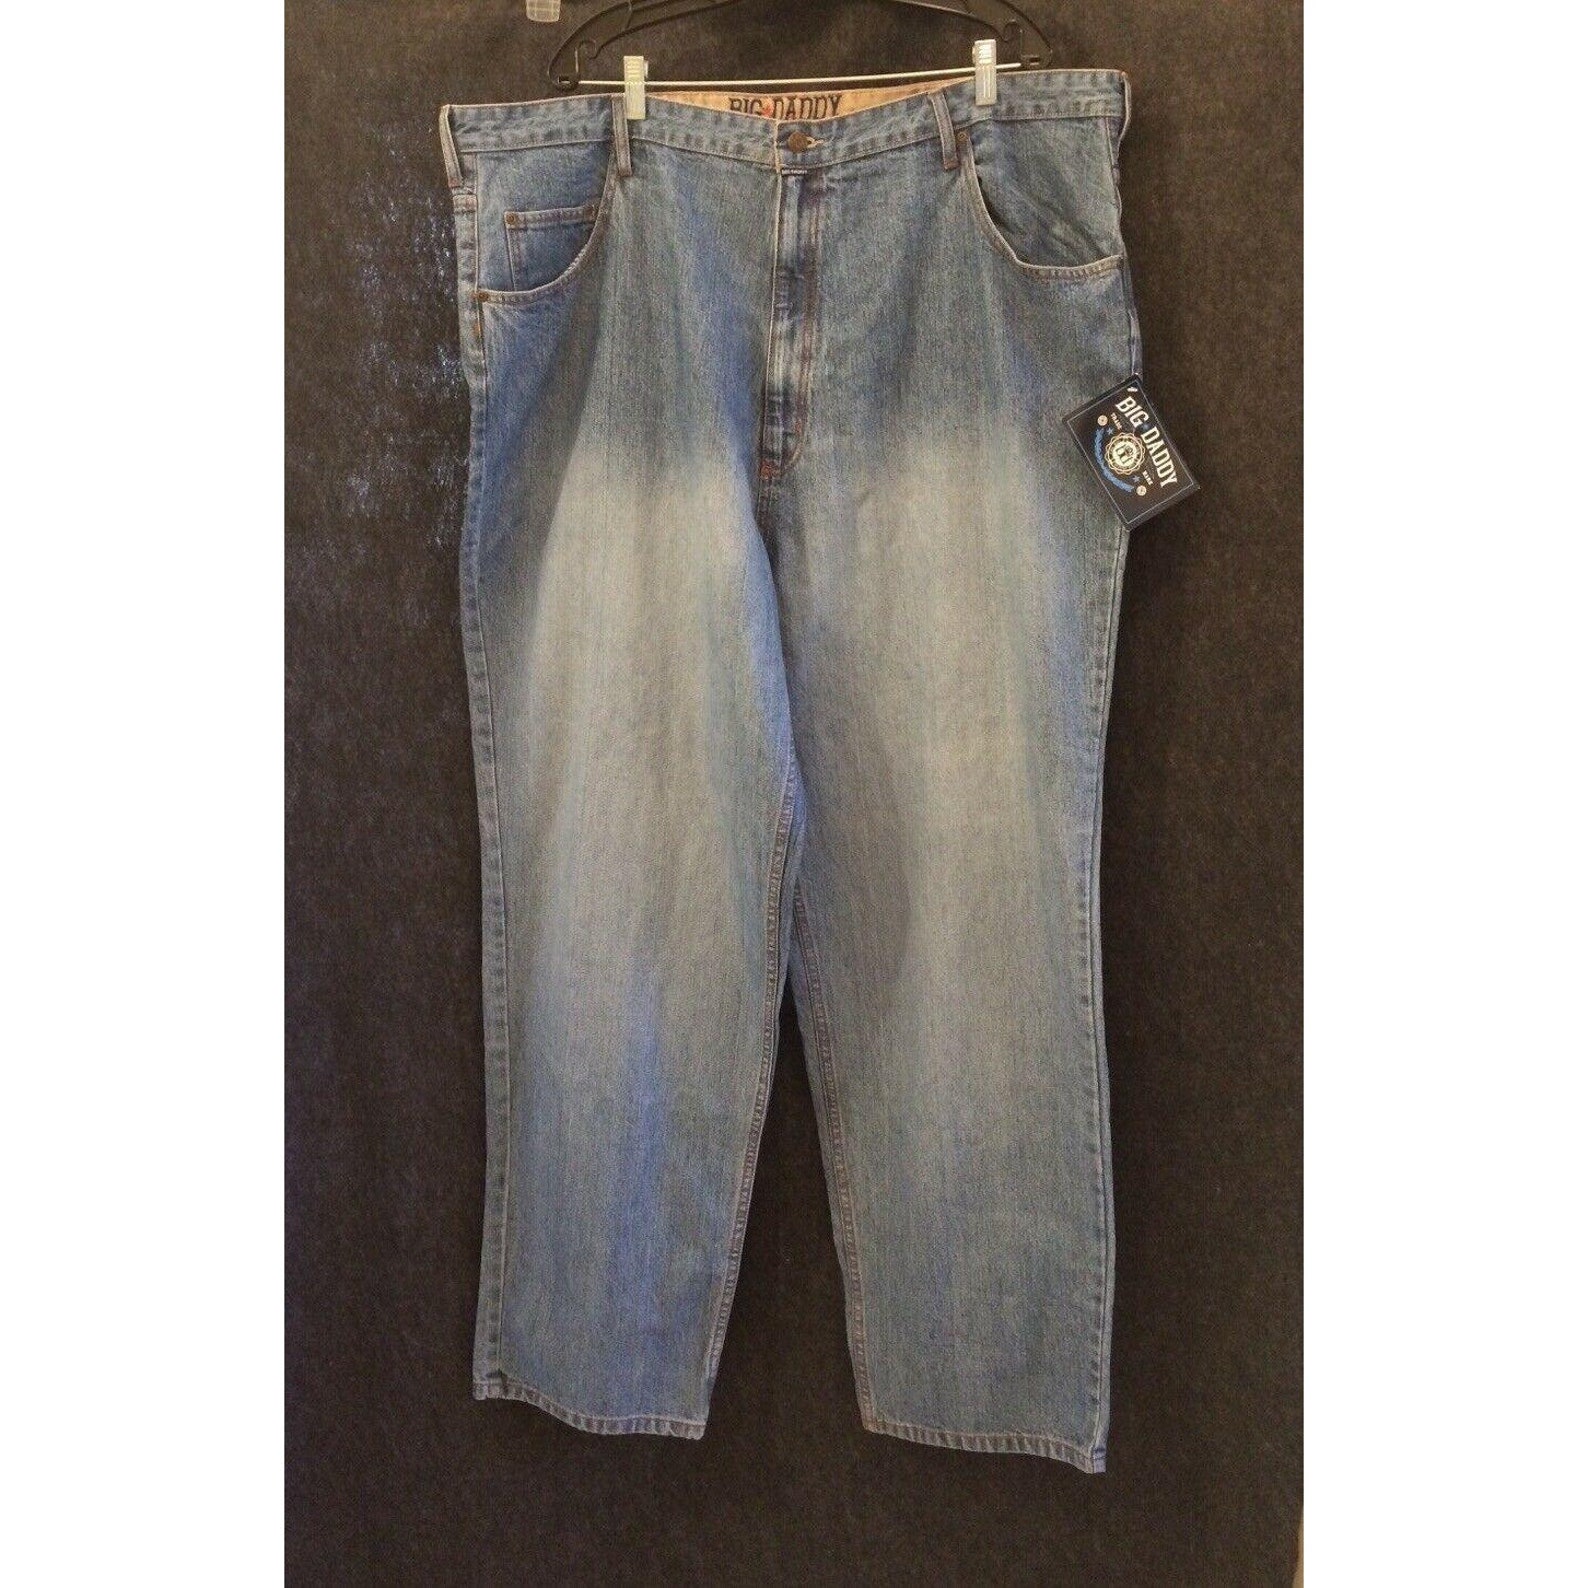 Men's Blue Jeans Big Daddy Denim 48 x 34 Vintage With | Etsy